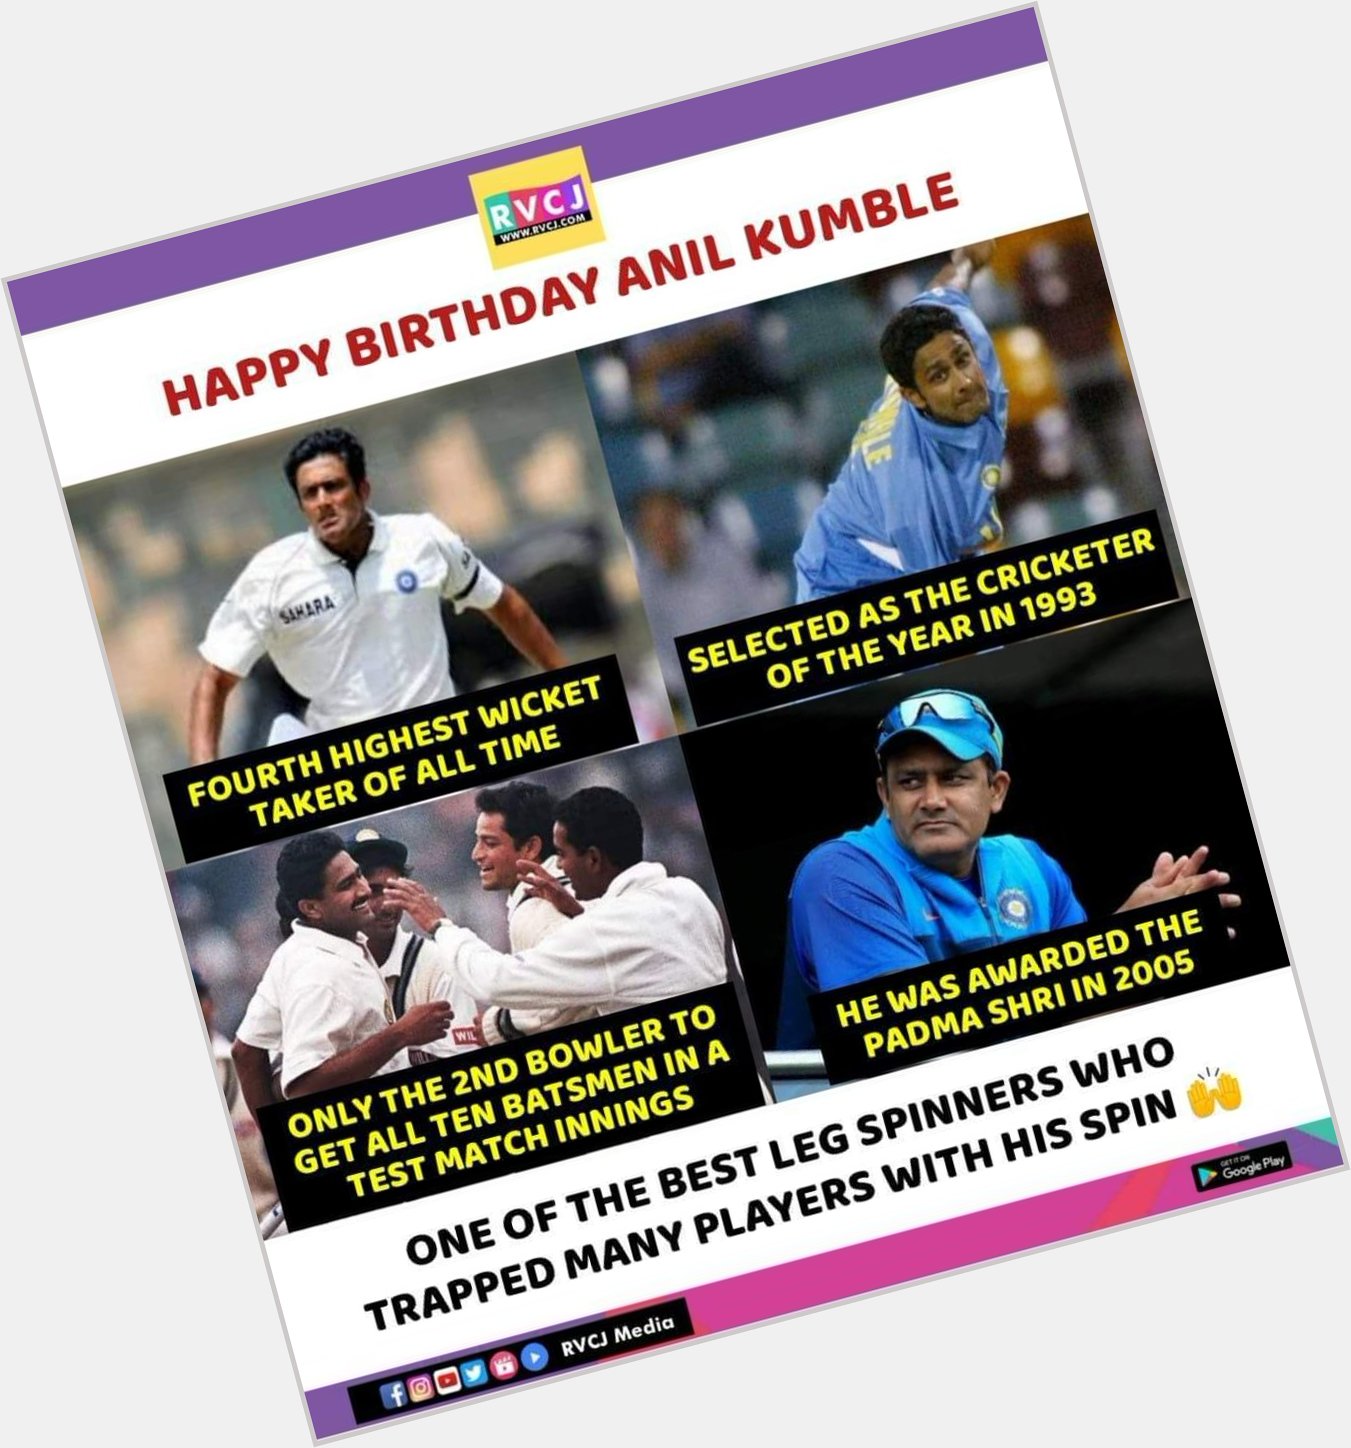 Happy Birthday Anil Kumble!  